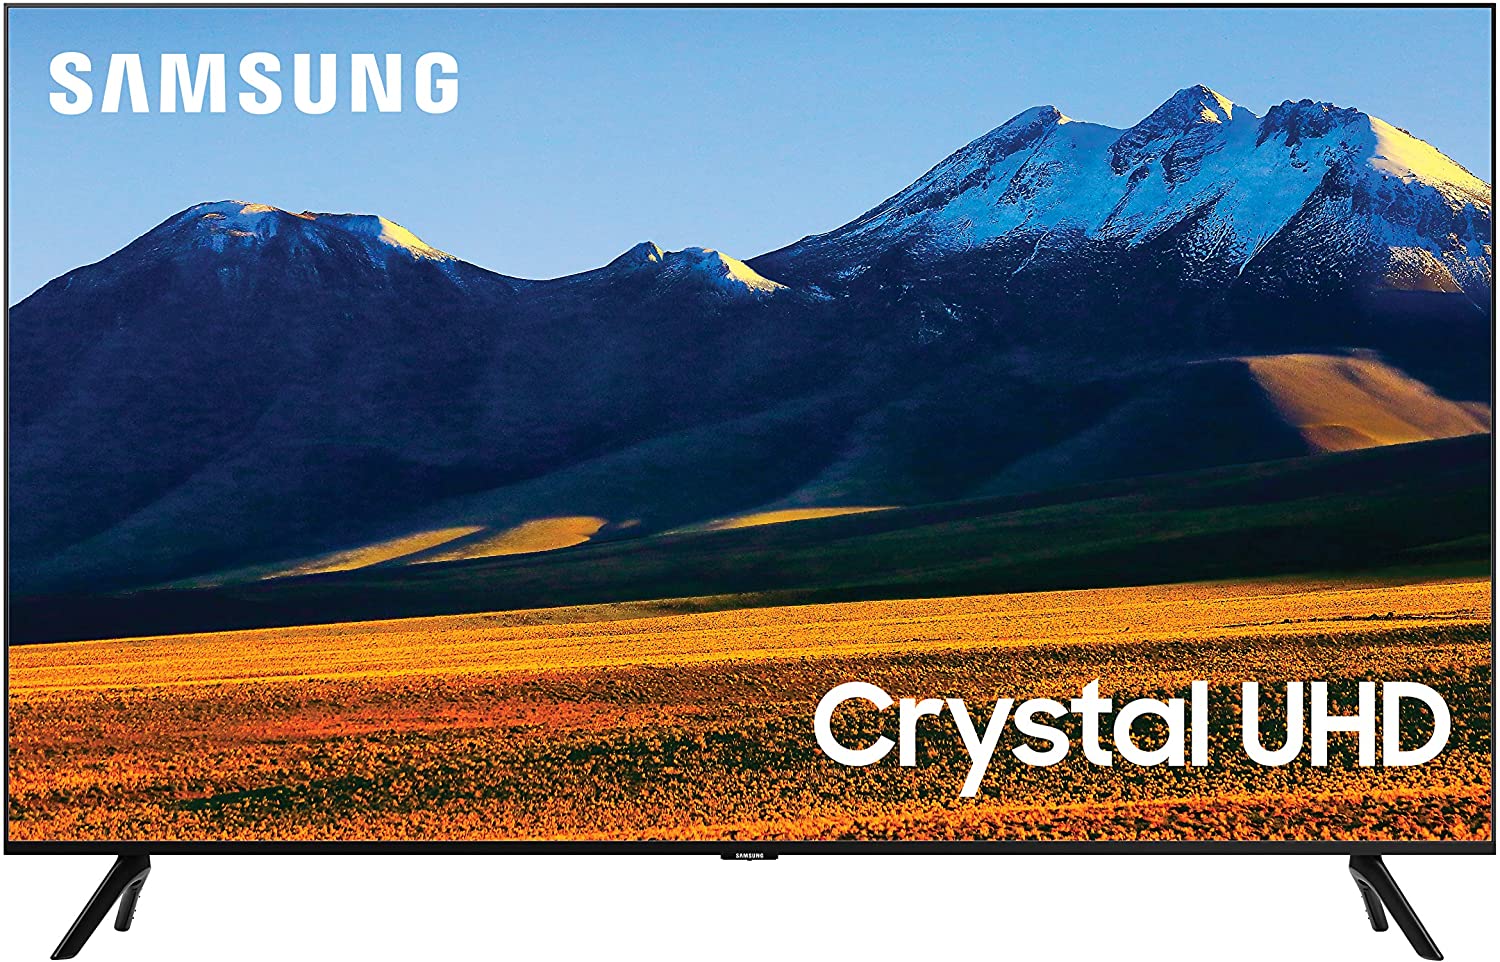 Samsung - 86” Class TU9000 LED 4K UHD Smart Tizen TV - Amazon, BestBuy - $1697.99 + free shipping